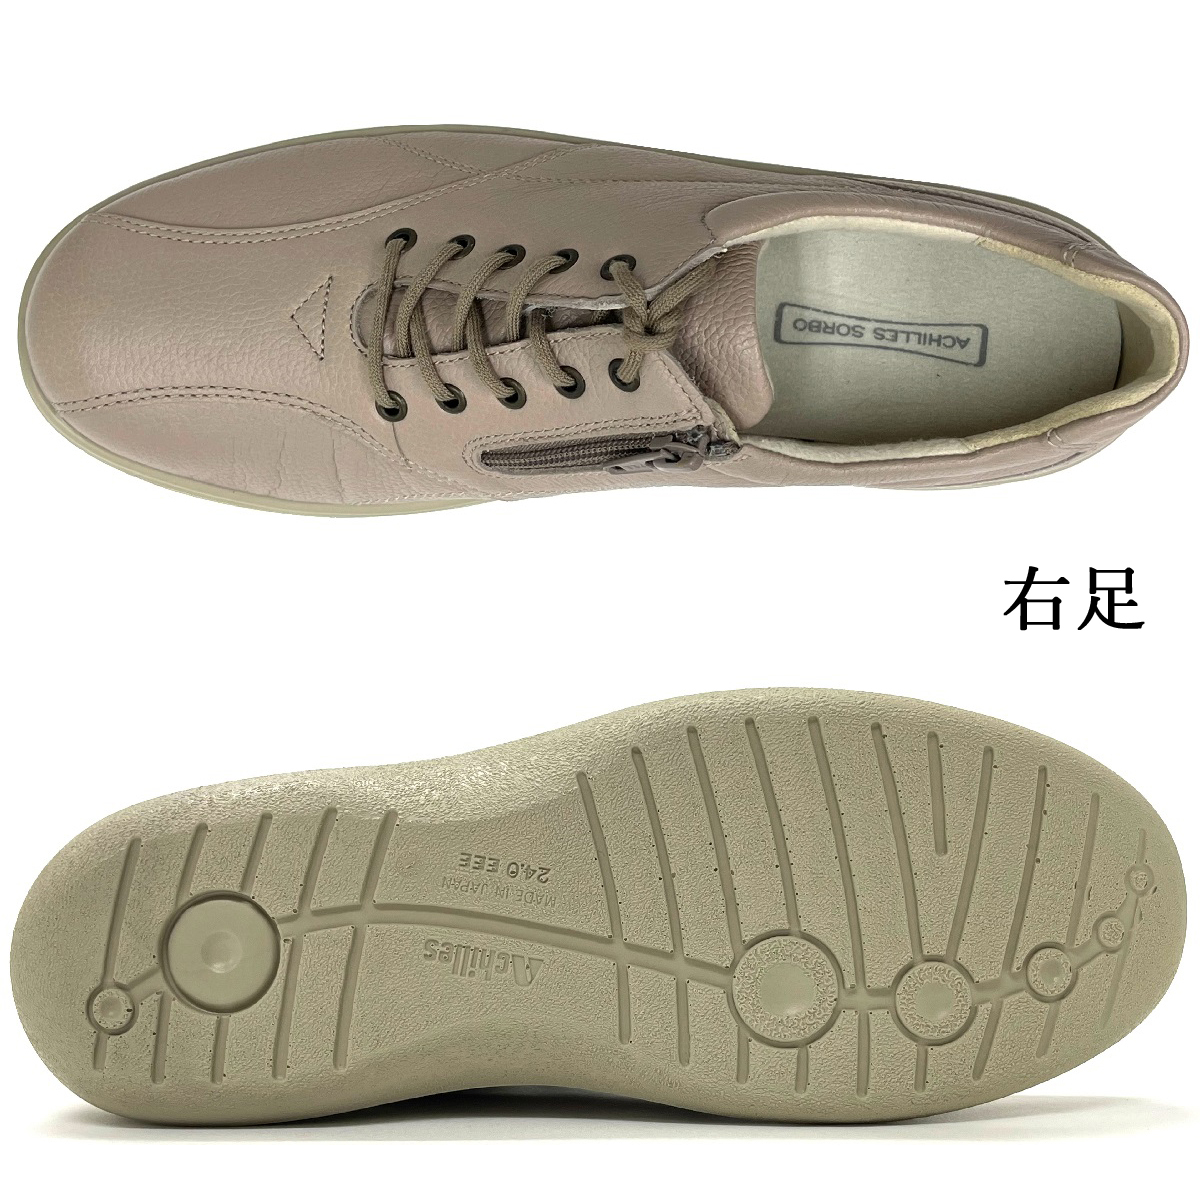  translation have!! SRL3120 gray ju24.0cm Achilles sorubo lady's shoes walking shoes 3E approximately 4.5cm heel Achilles SORBO woman 050104